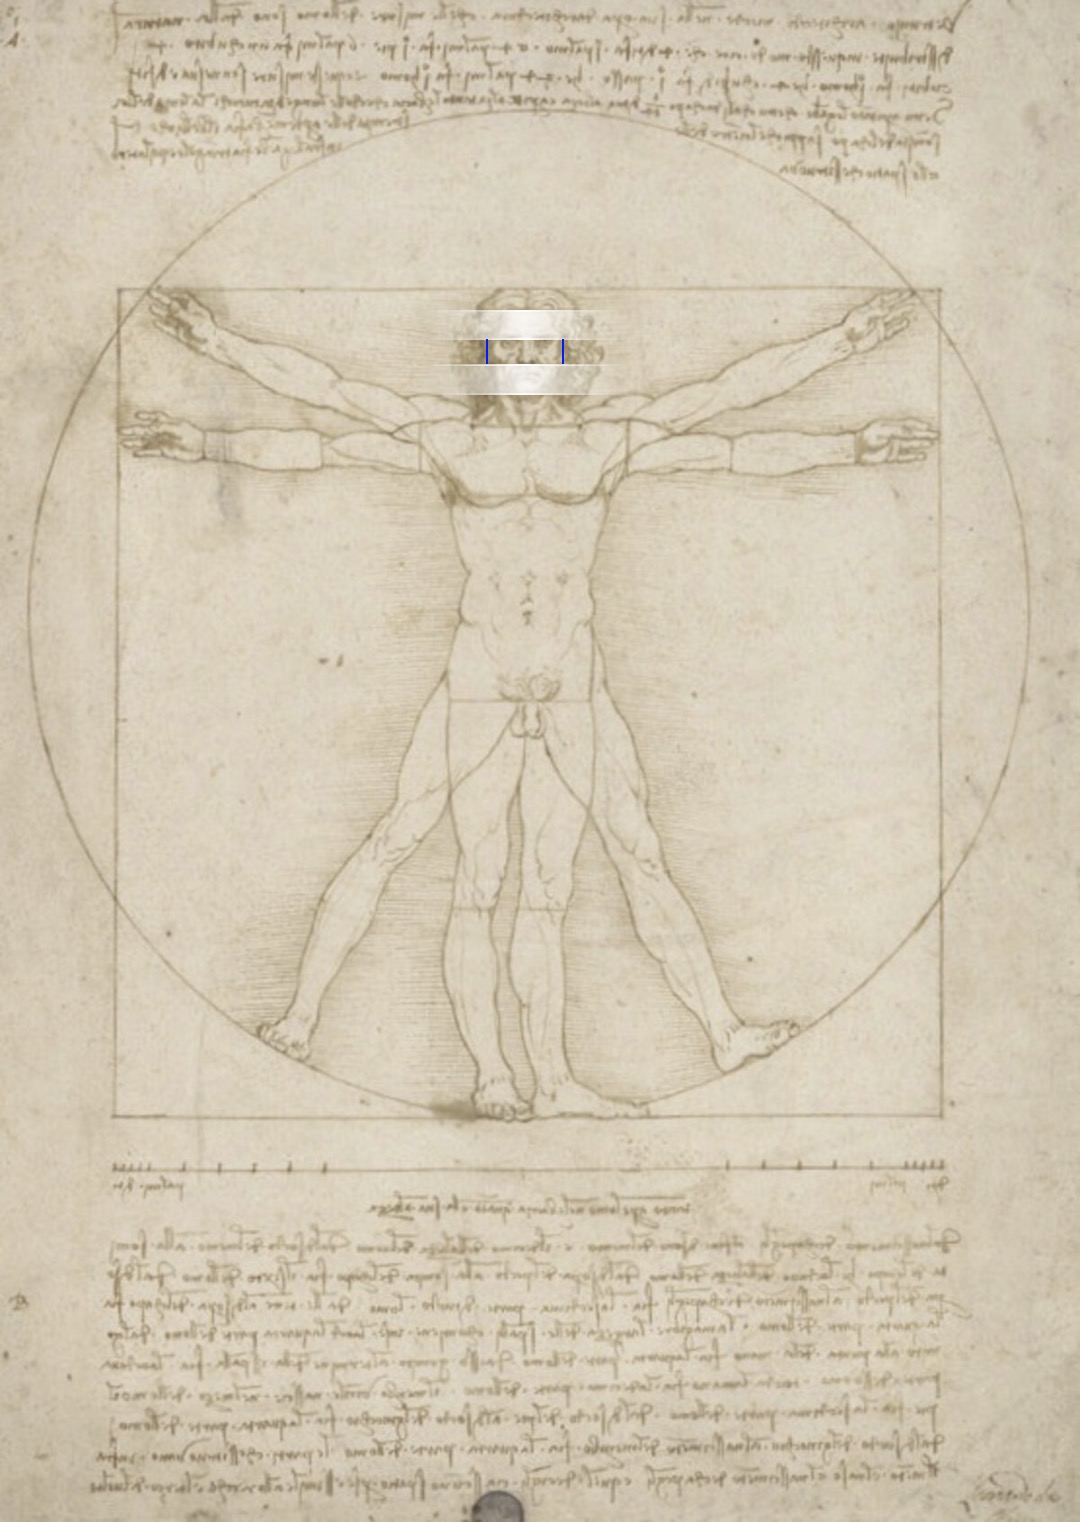 The Vitruvian Man - simply explained